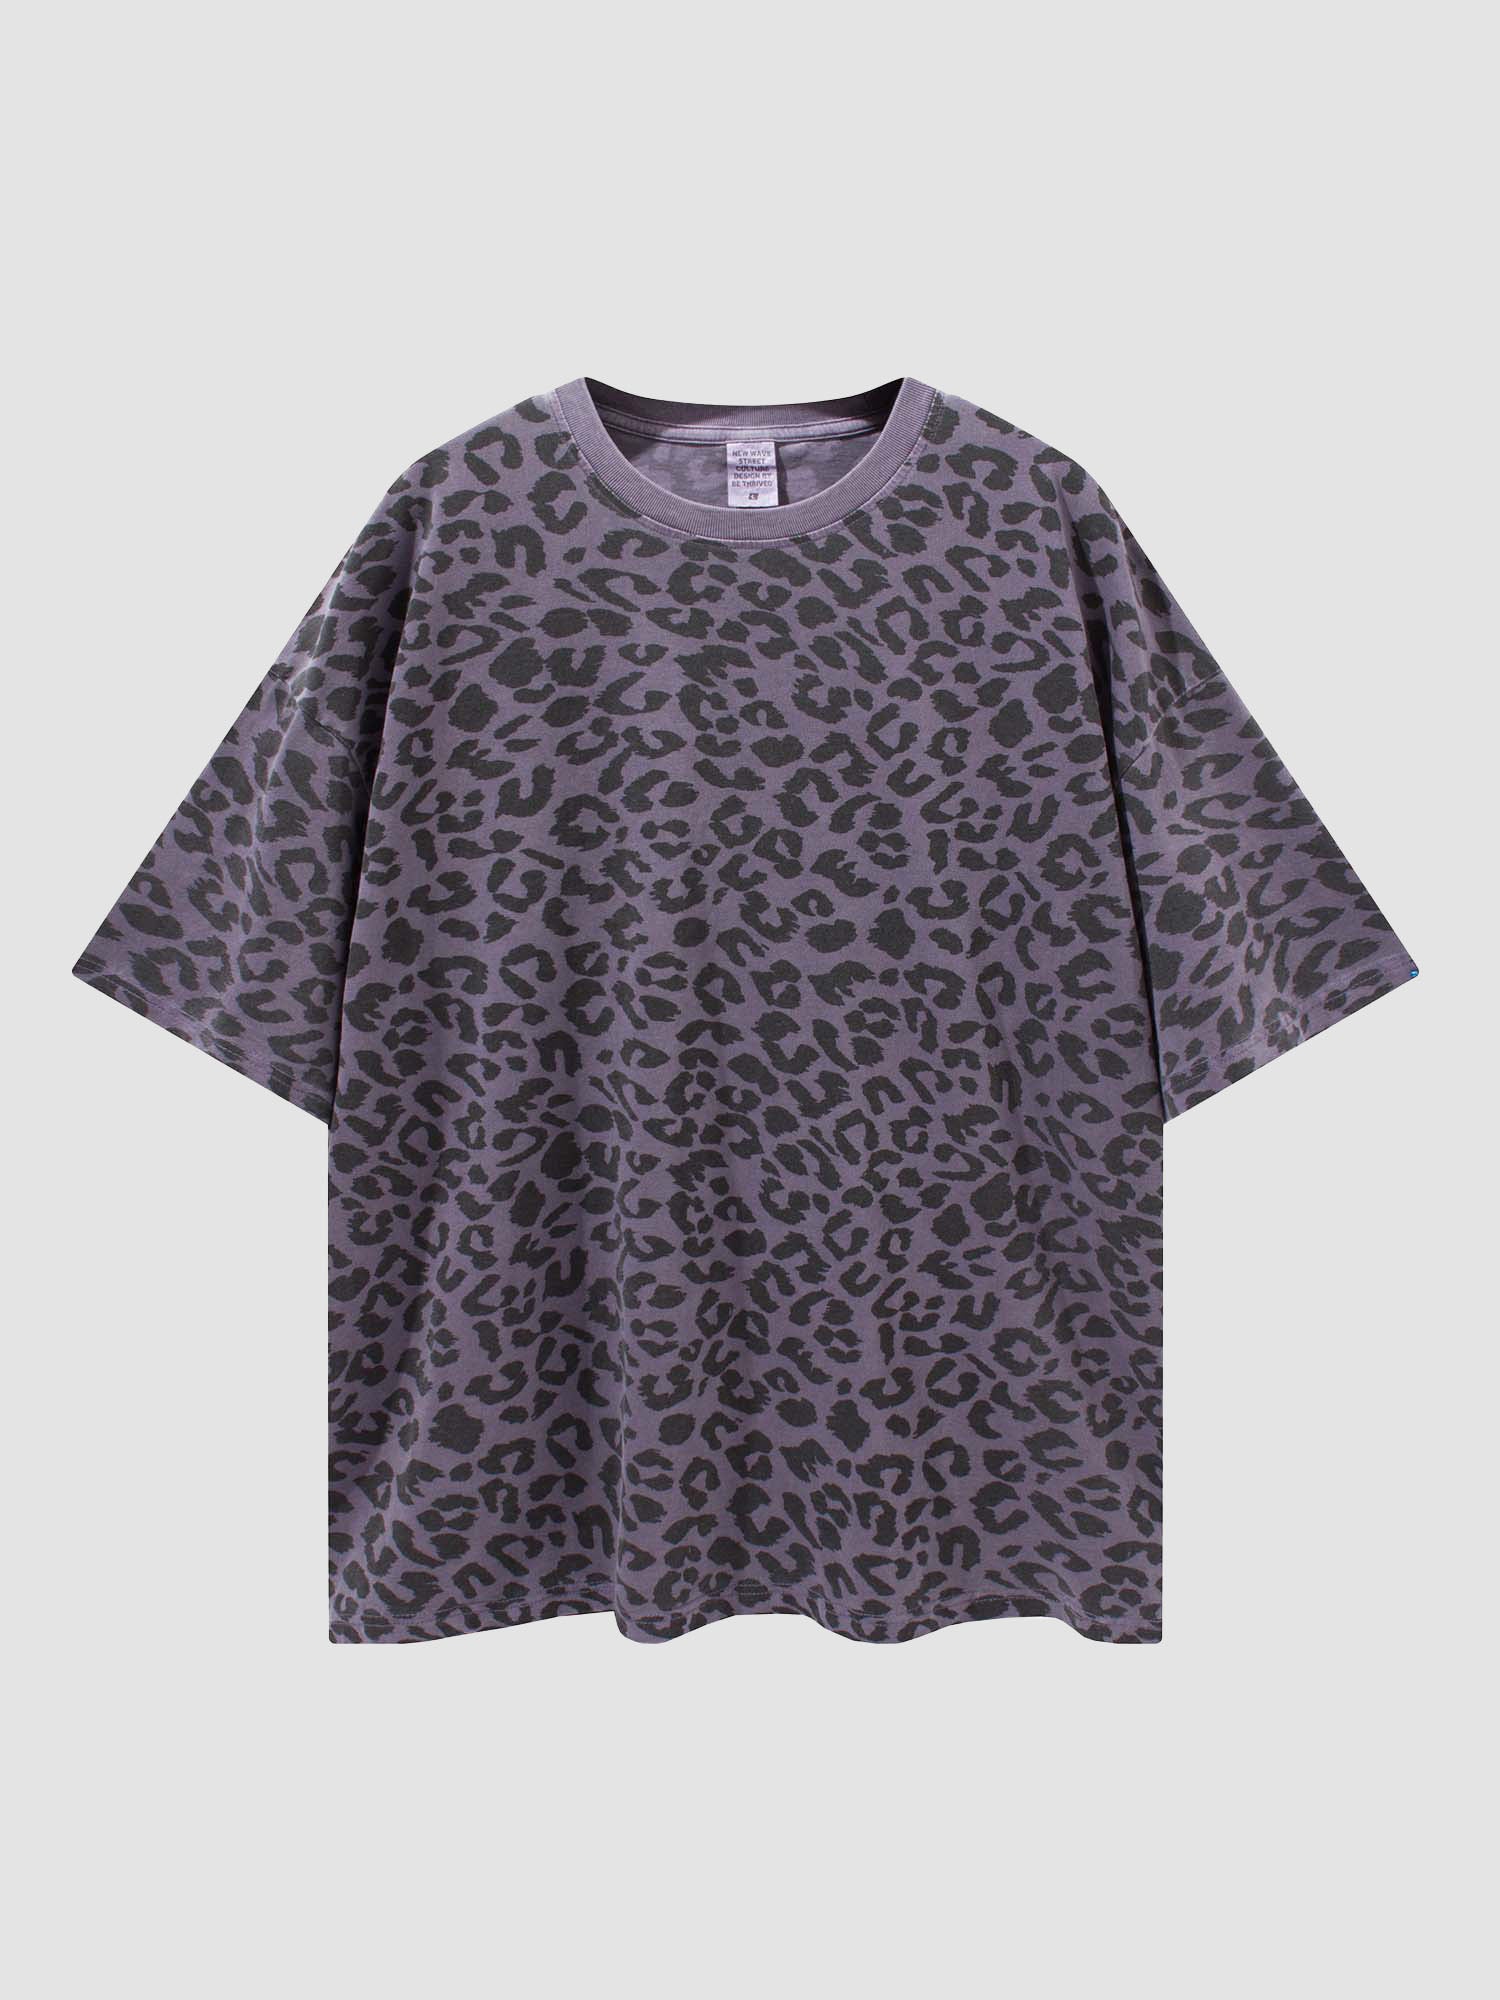 JUSTNOTAG Purple leopard Print 100% Cotton Short Sleeve Tee